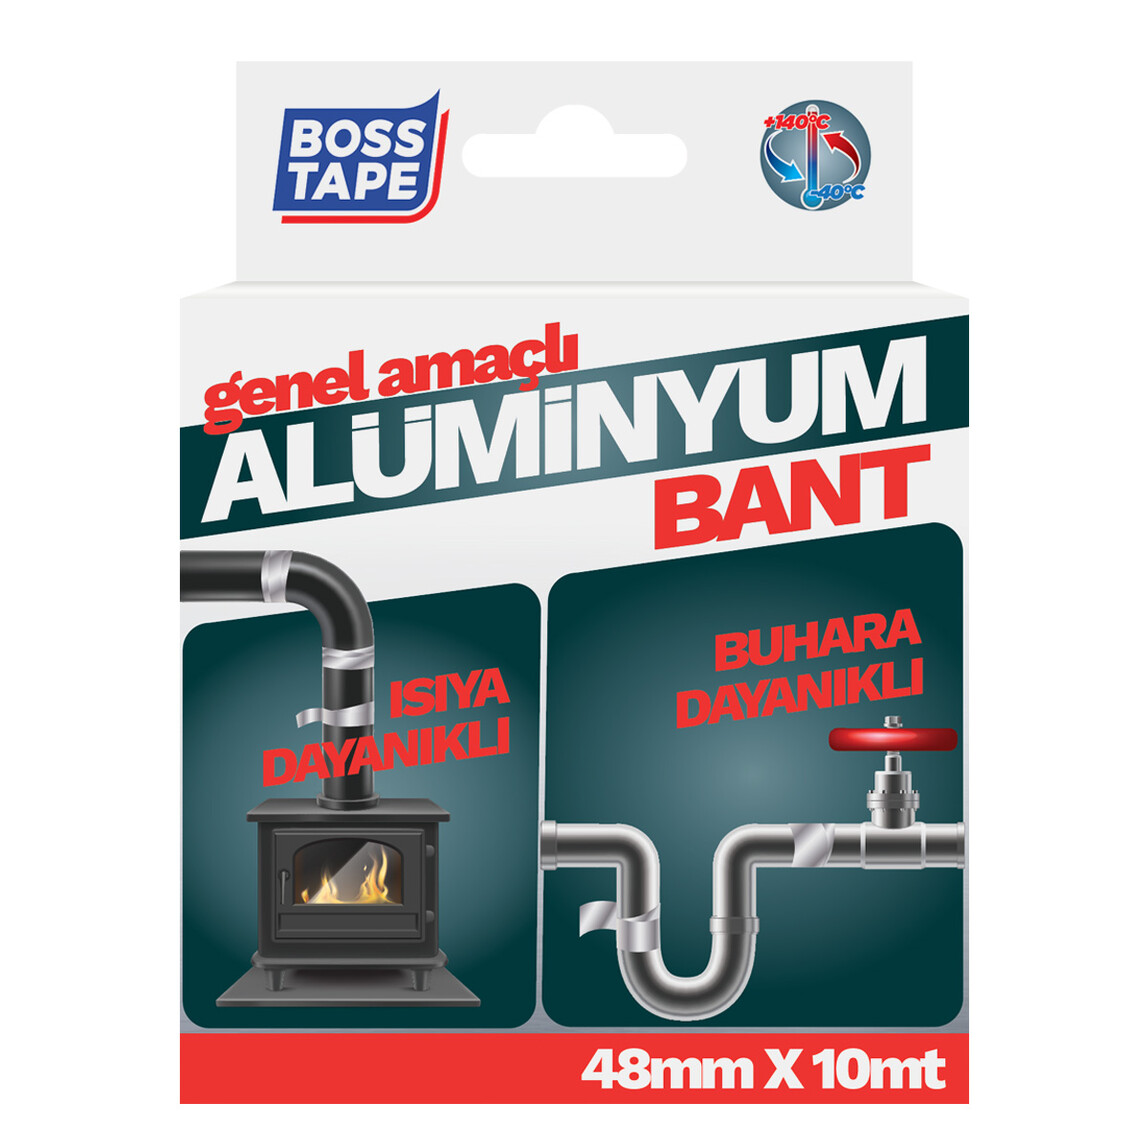    Boss Tape 30 Mikron Alüminyum Bant  